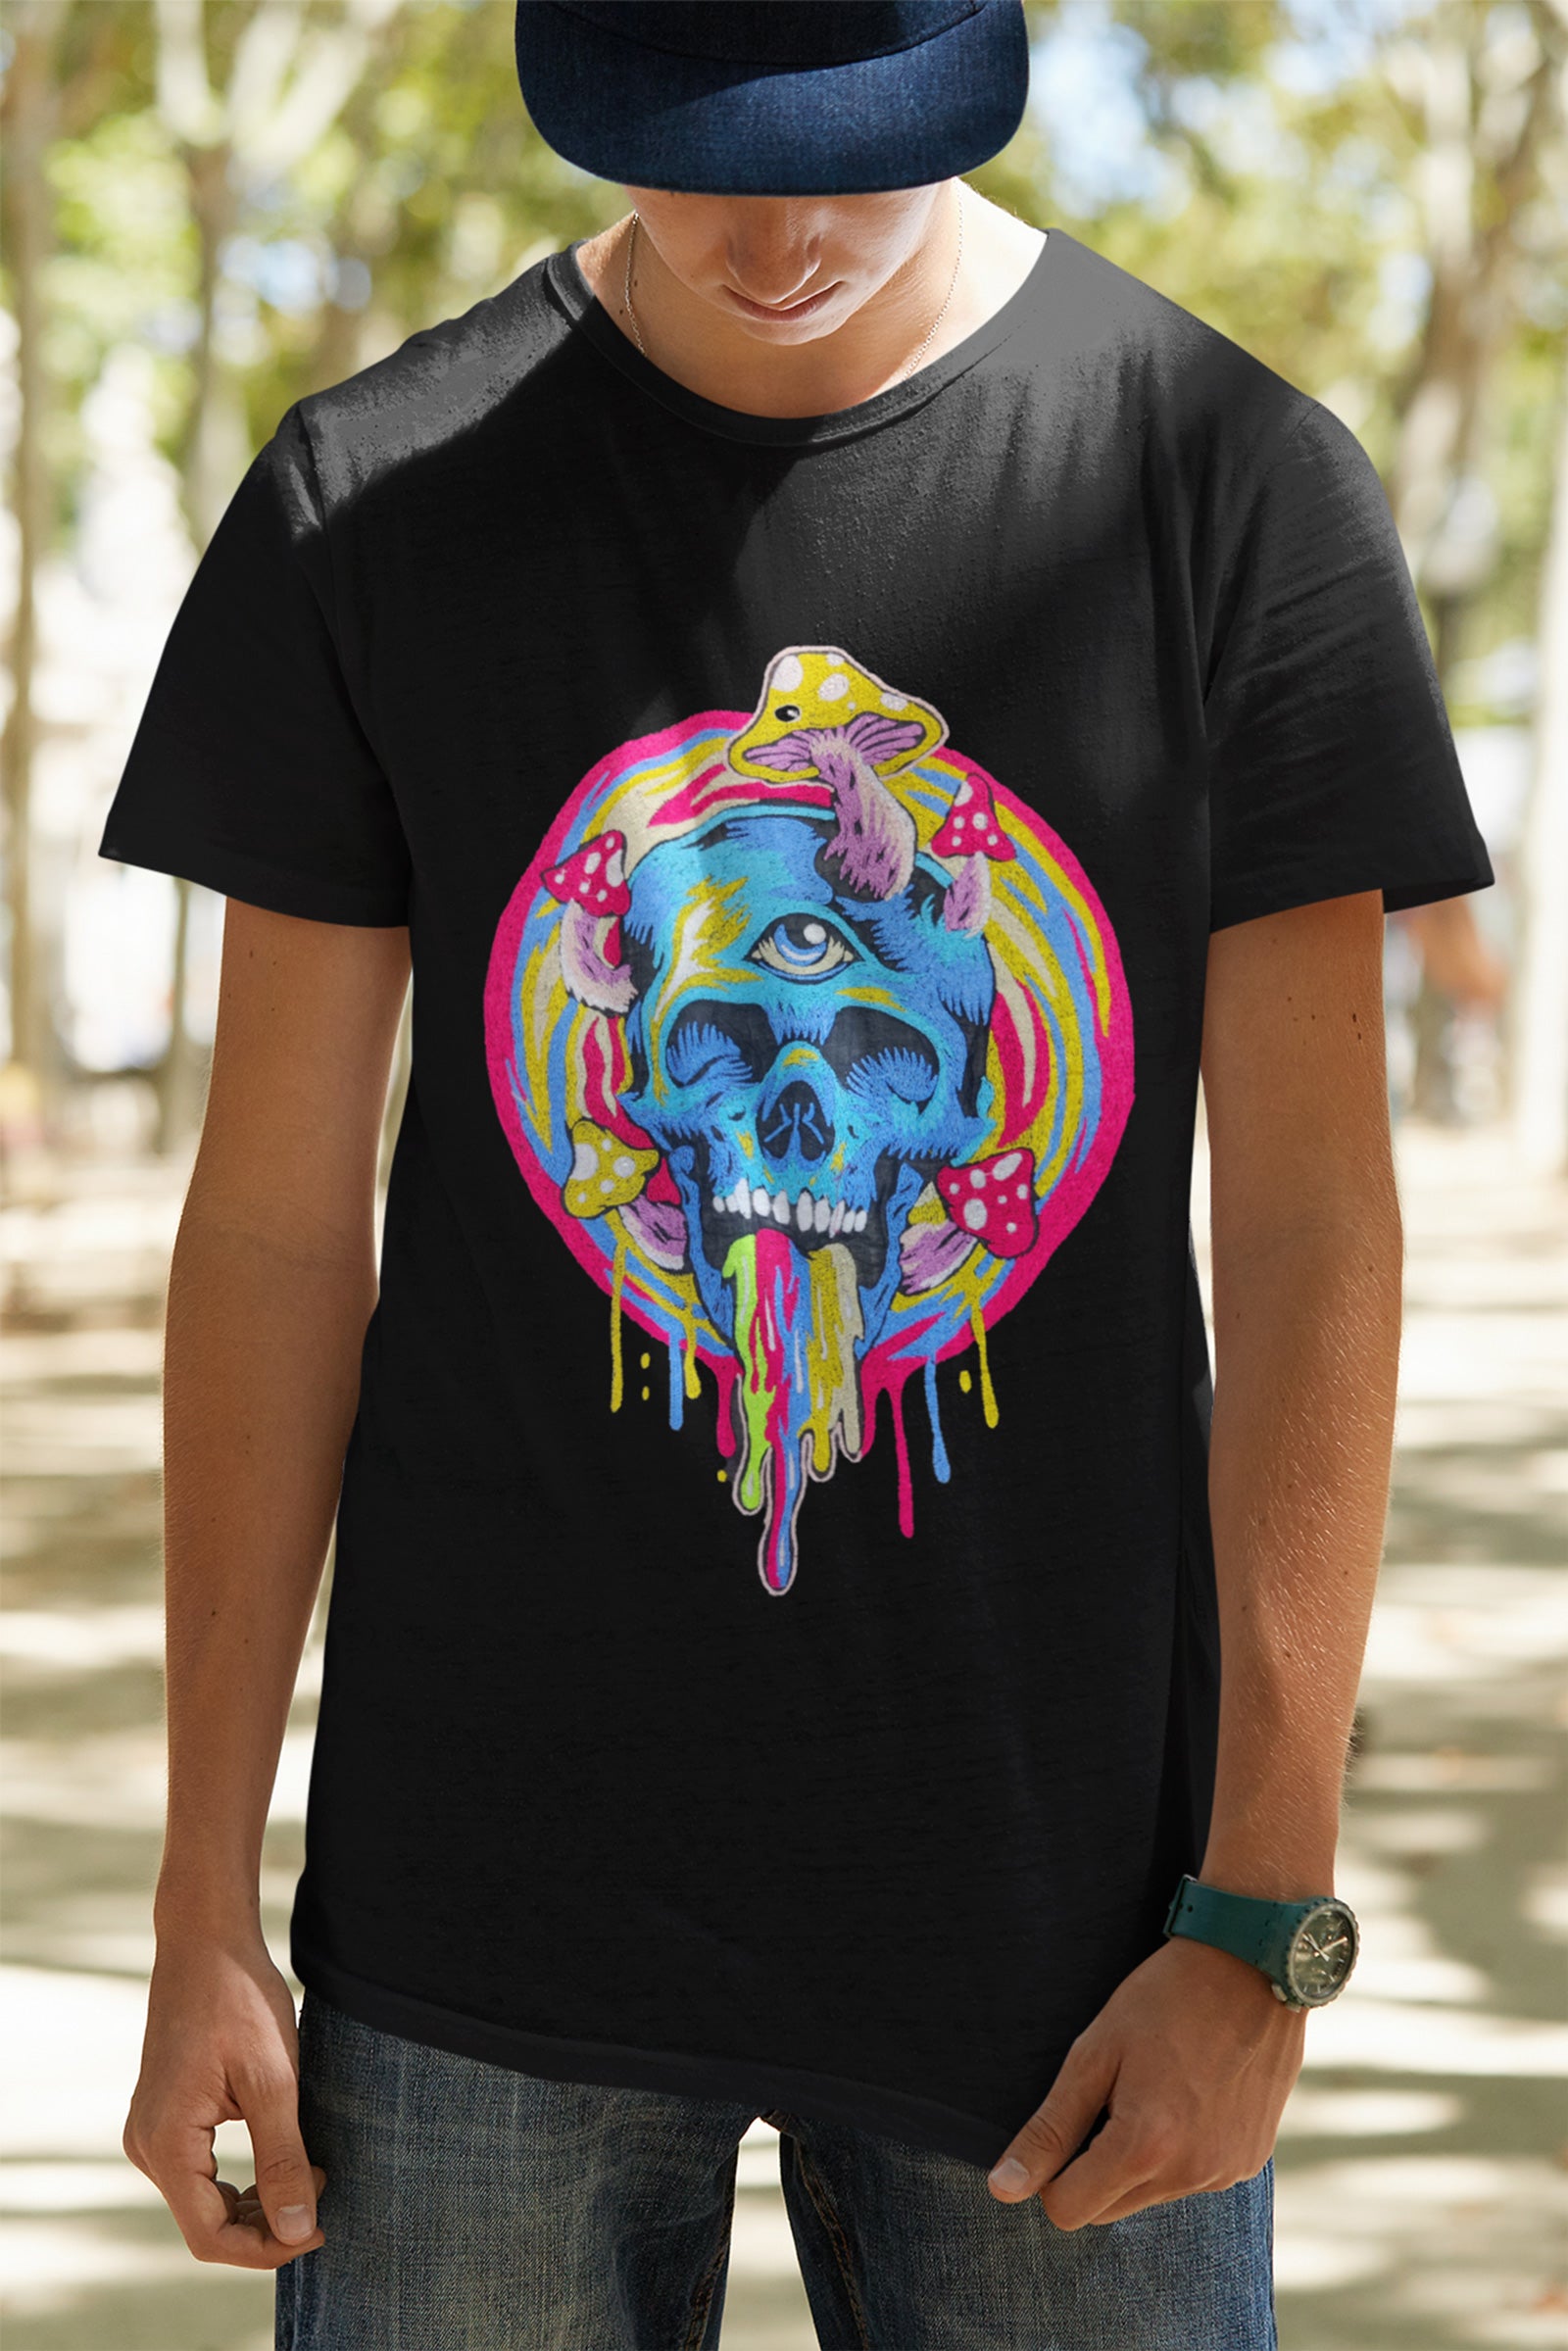 Embroidered Skull Magic Mushroom Artwork Half Sleeve Black T-shirt For Men